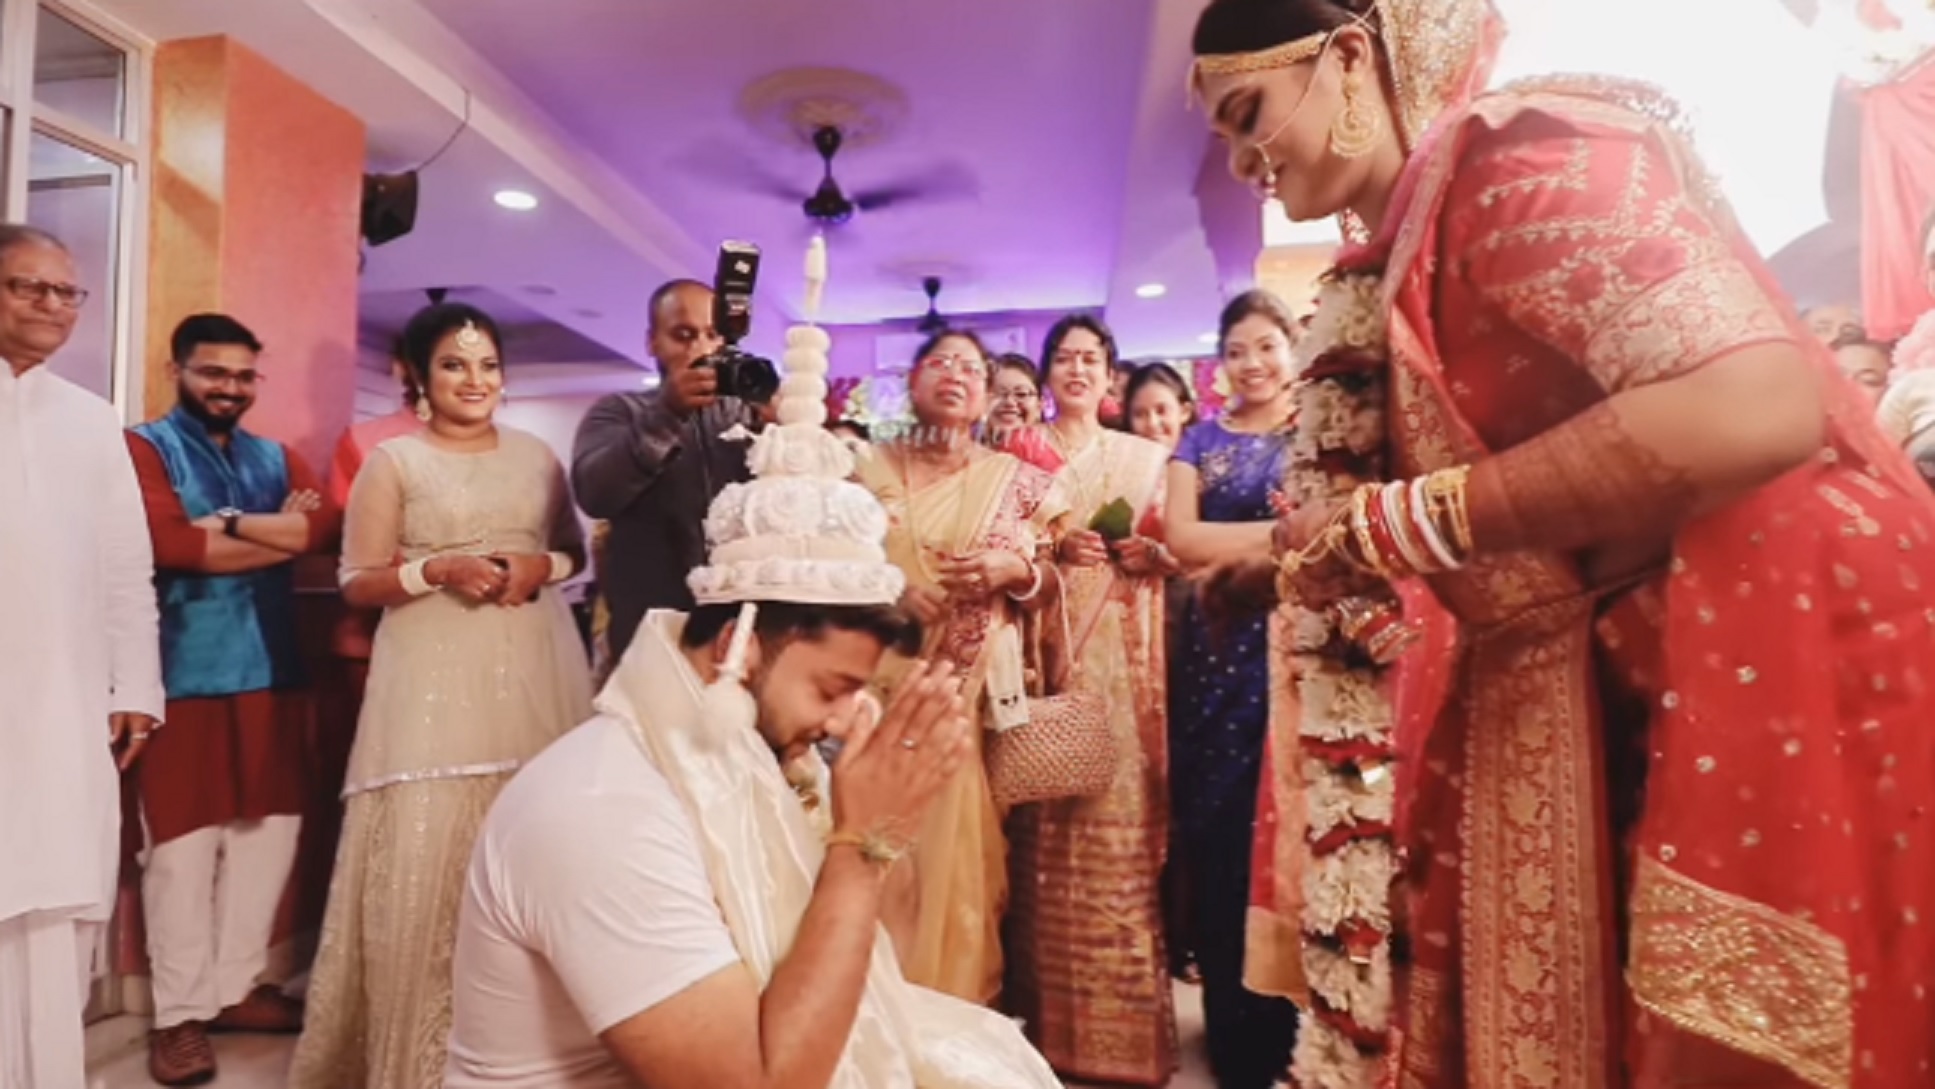 Groom Gets Down On His Knees To Seek ‘Aashirwaad’ From The Bride In Bengali Wedding, To Reciprocate Her Gesture